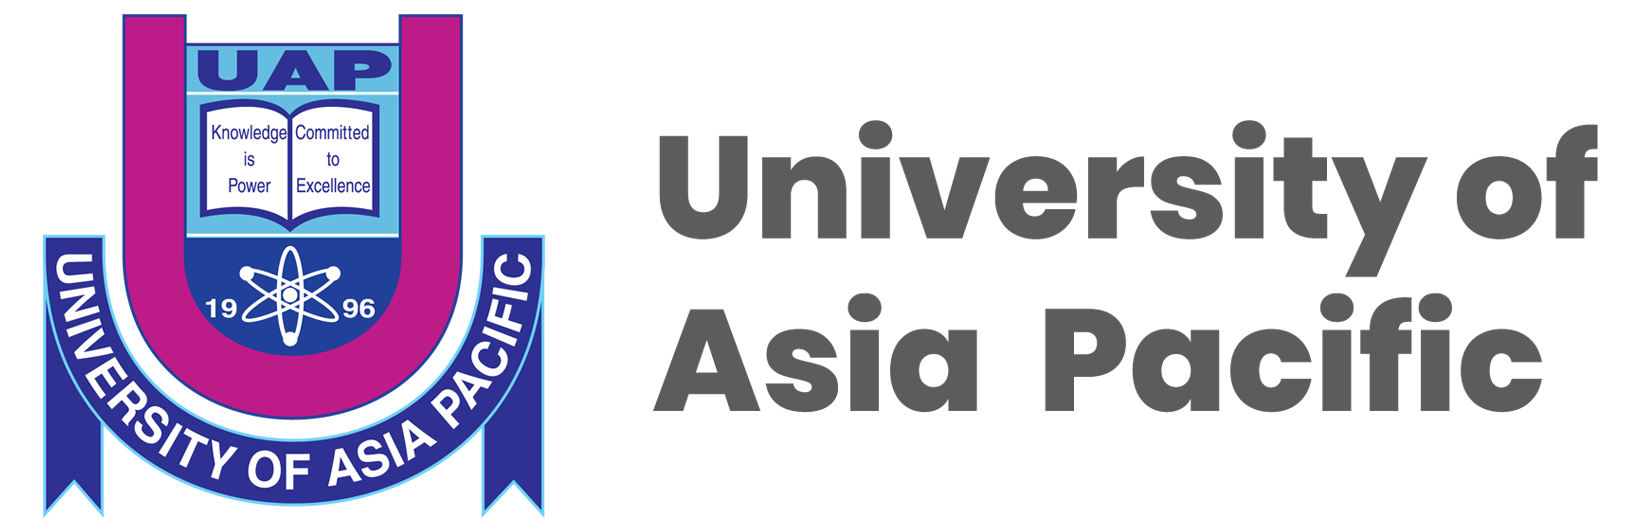 uap-logo